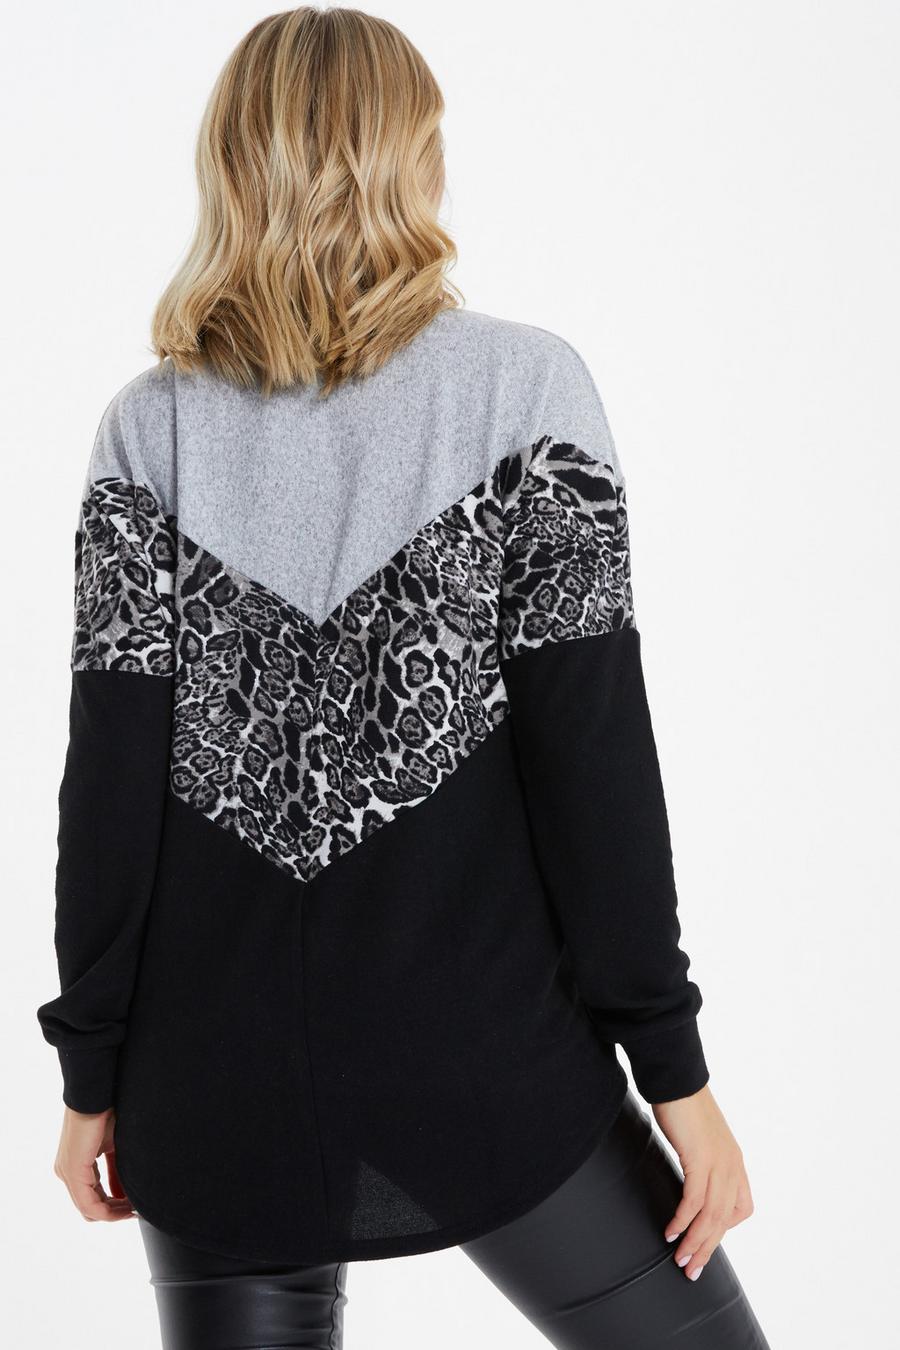 Quiz Quiz Womens Grey V-Neck Animal Print Polyester Pullover Jumper Size S 